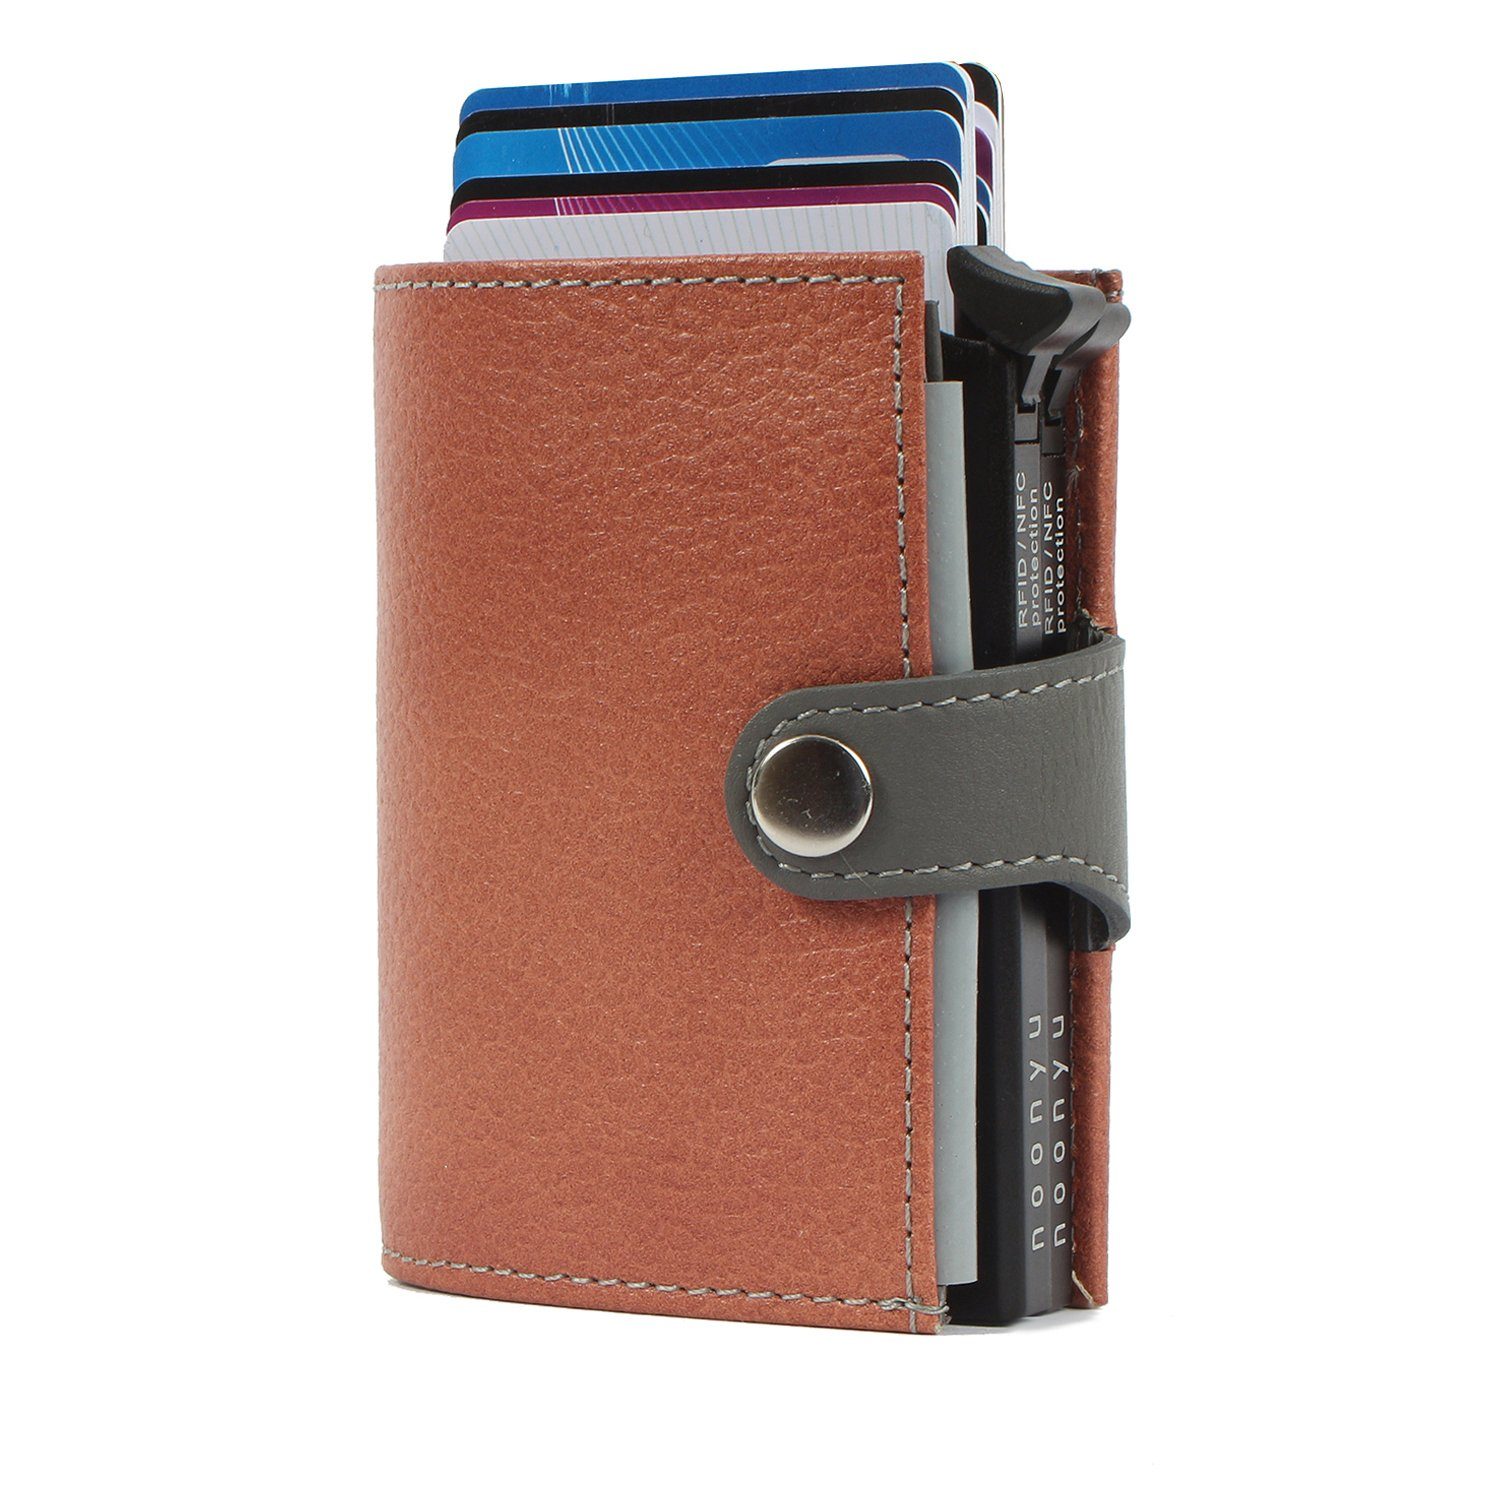 salmon Geldbörse leather, noonyu RFID Kreditkartenbörse Margelisch double aus Leder Upcycling Mini